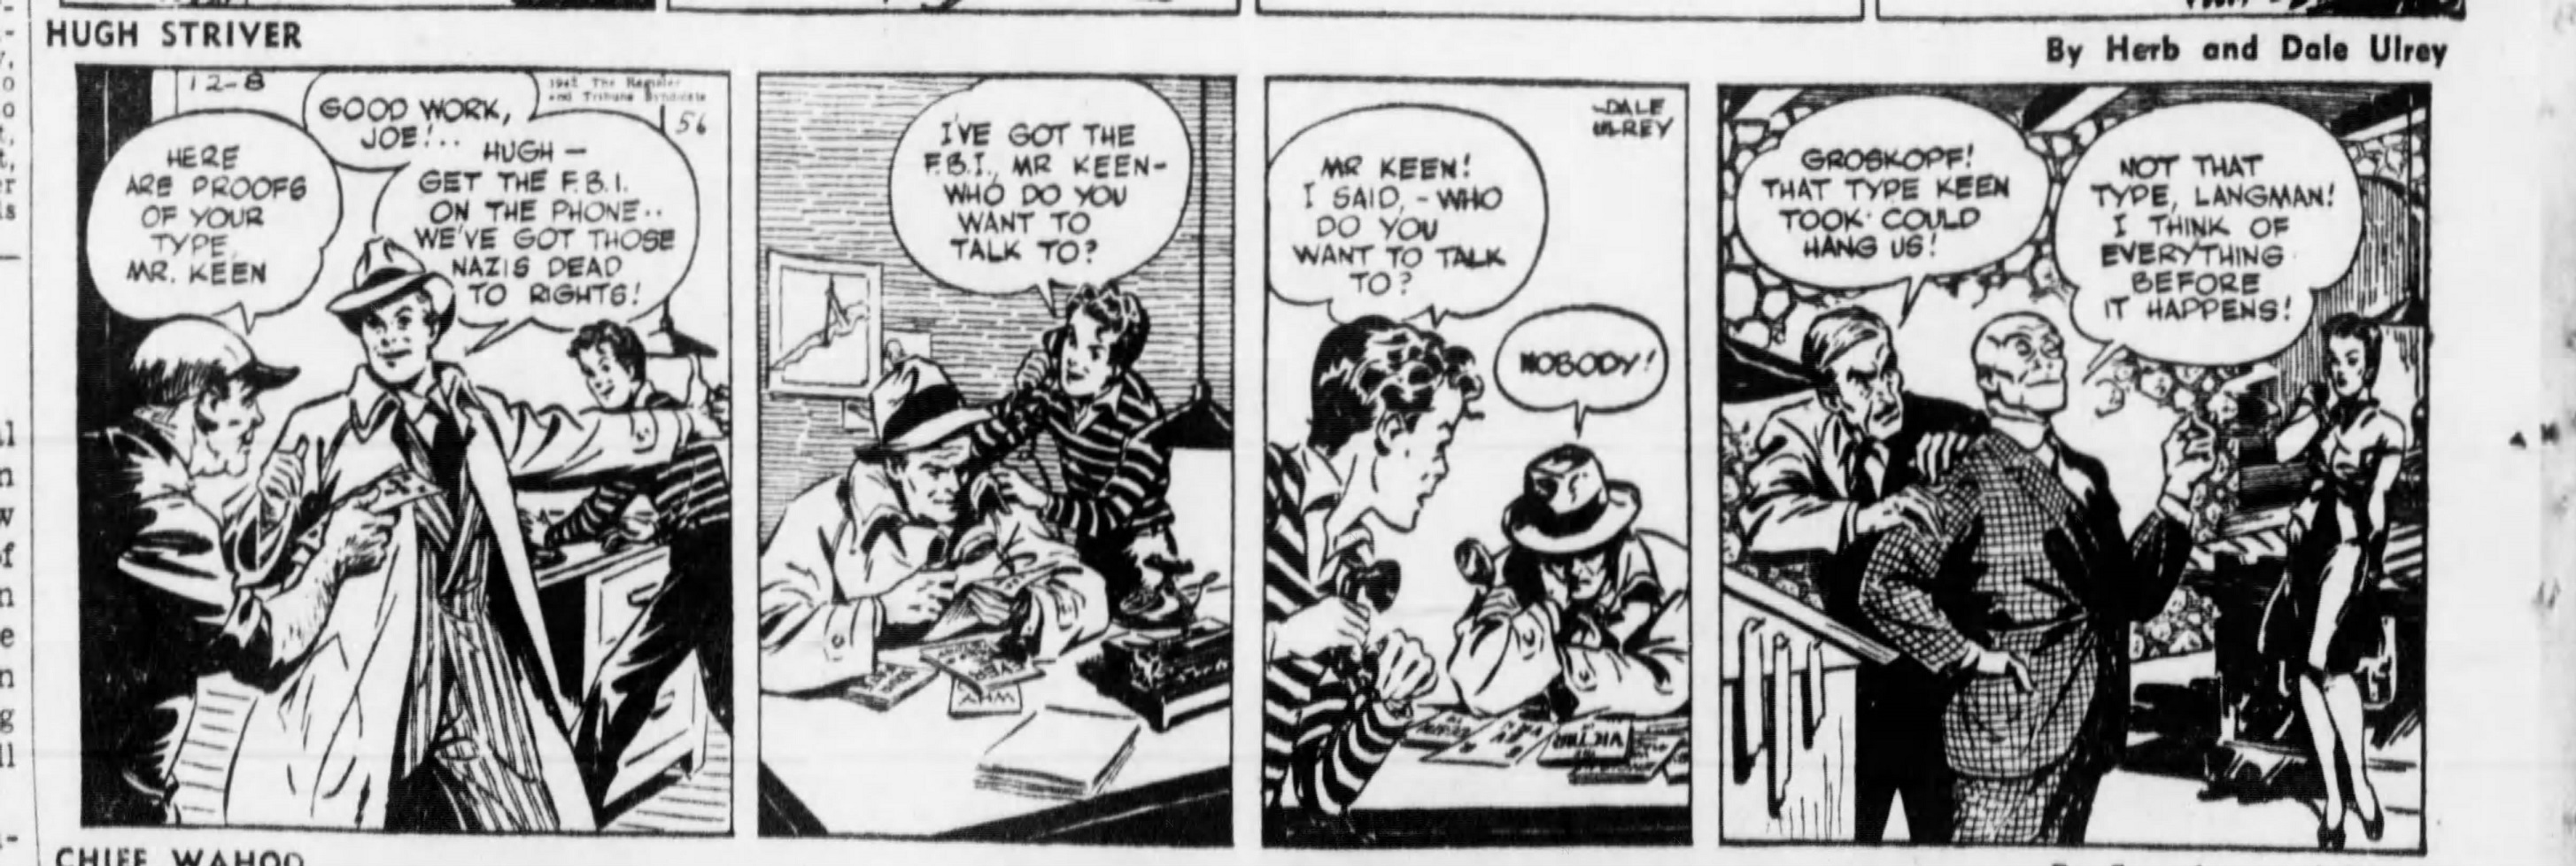 The_Brooklyn_Daily_Eagle_Tue__Dec_8__1942_(9).jpg